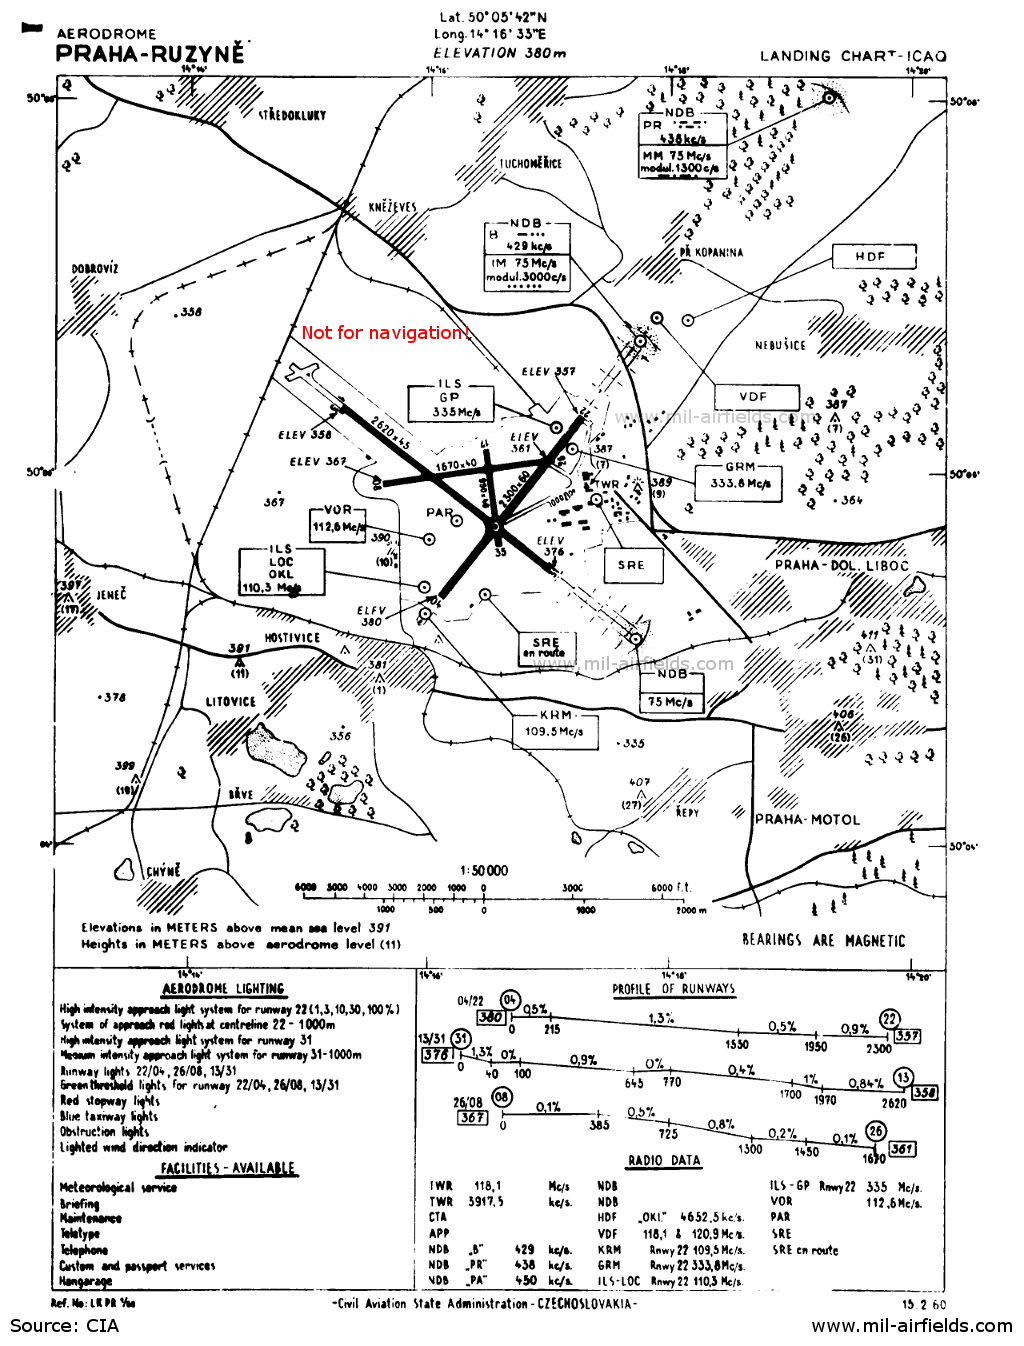 Aerodrom chart from 15 February 1960